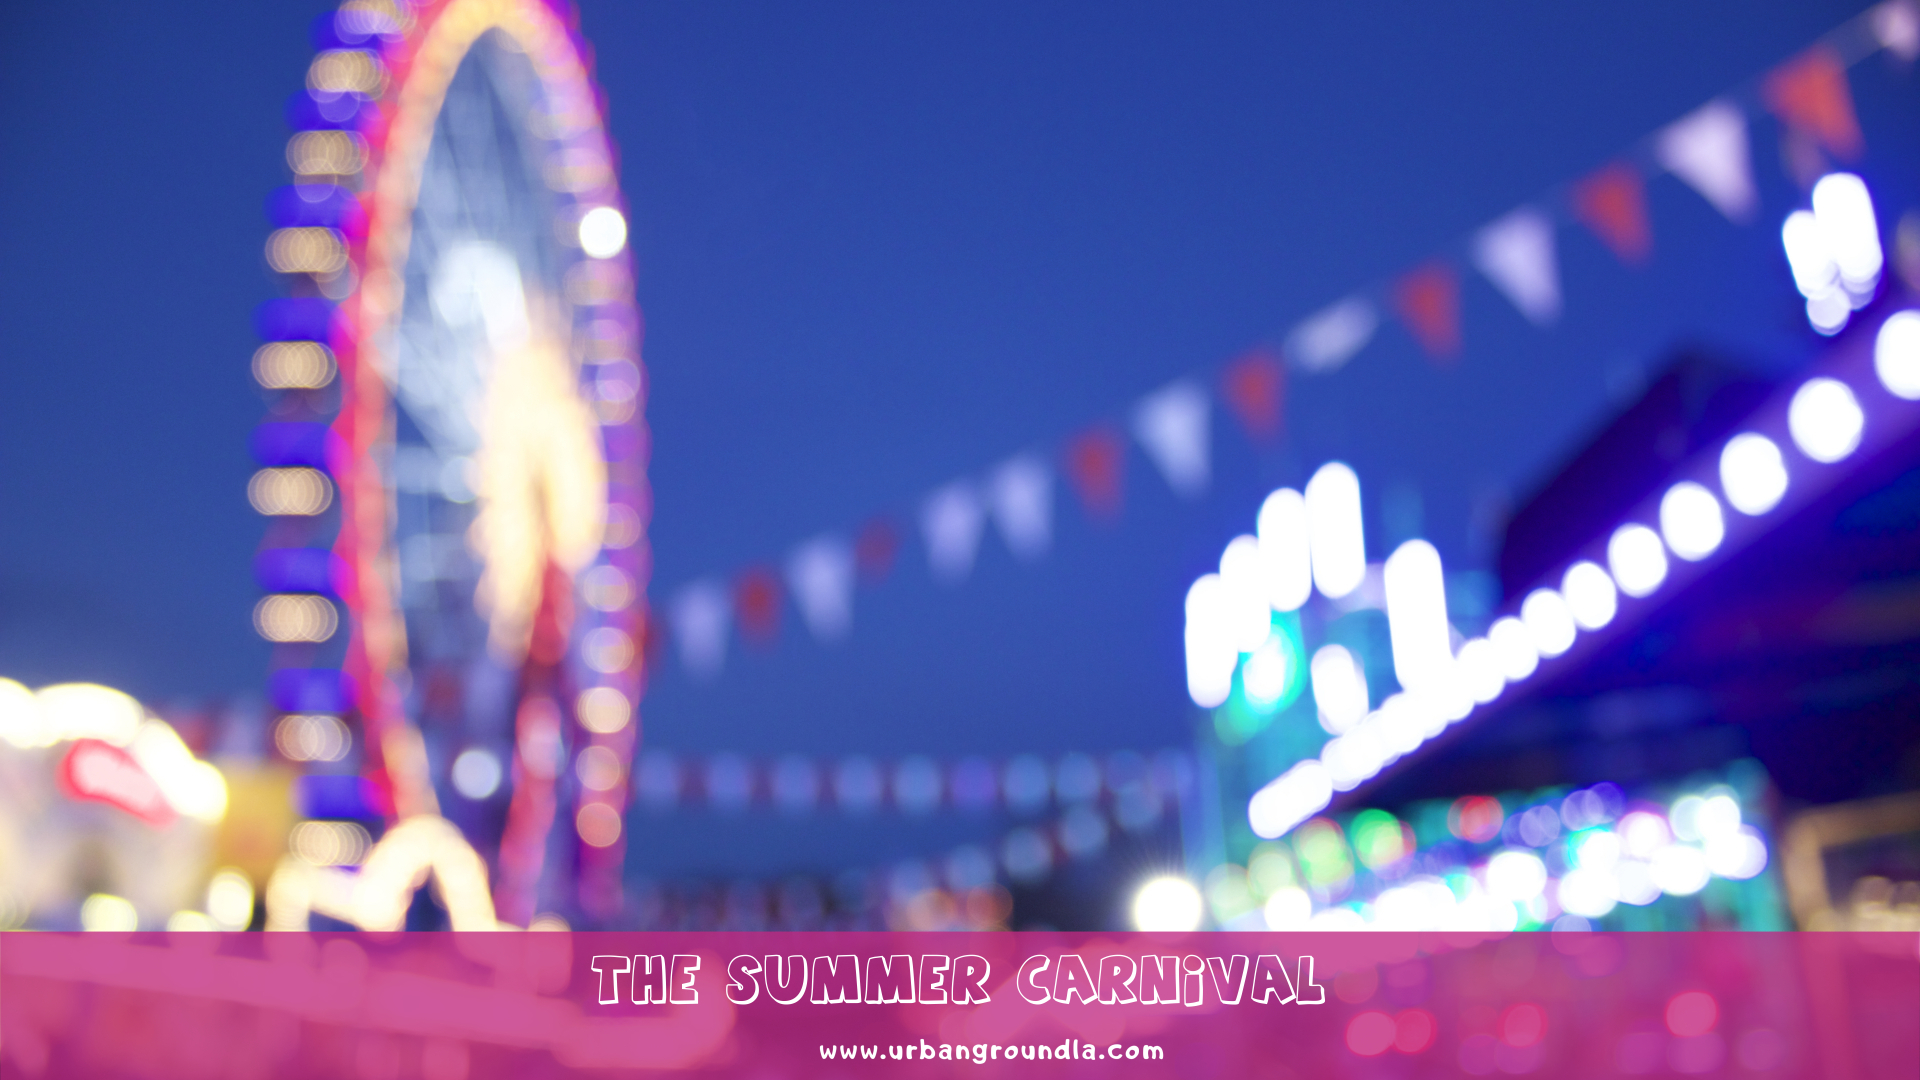 The Summer Carnival Urban Ground Resort & Residence